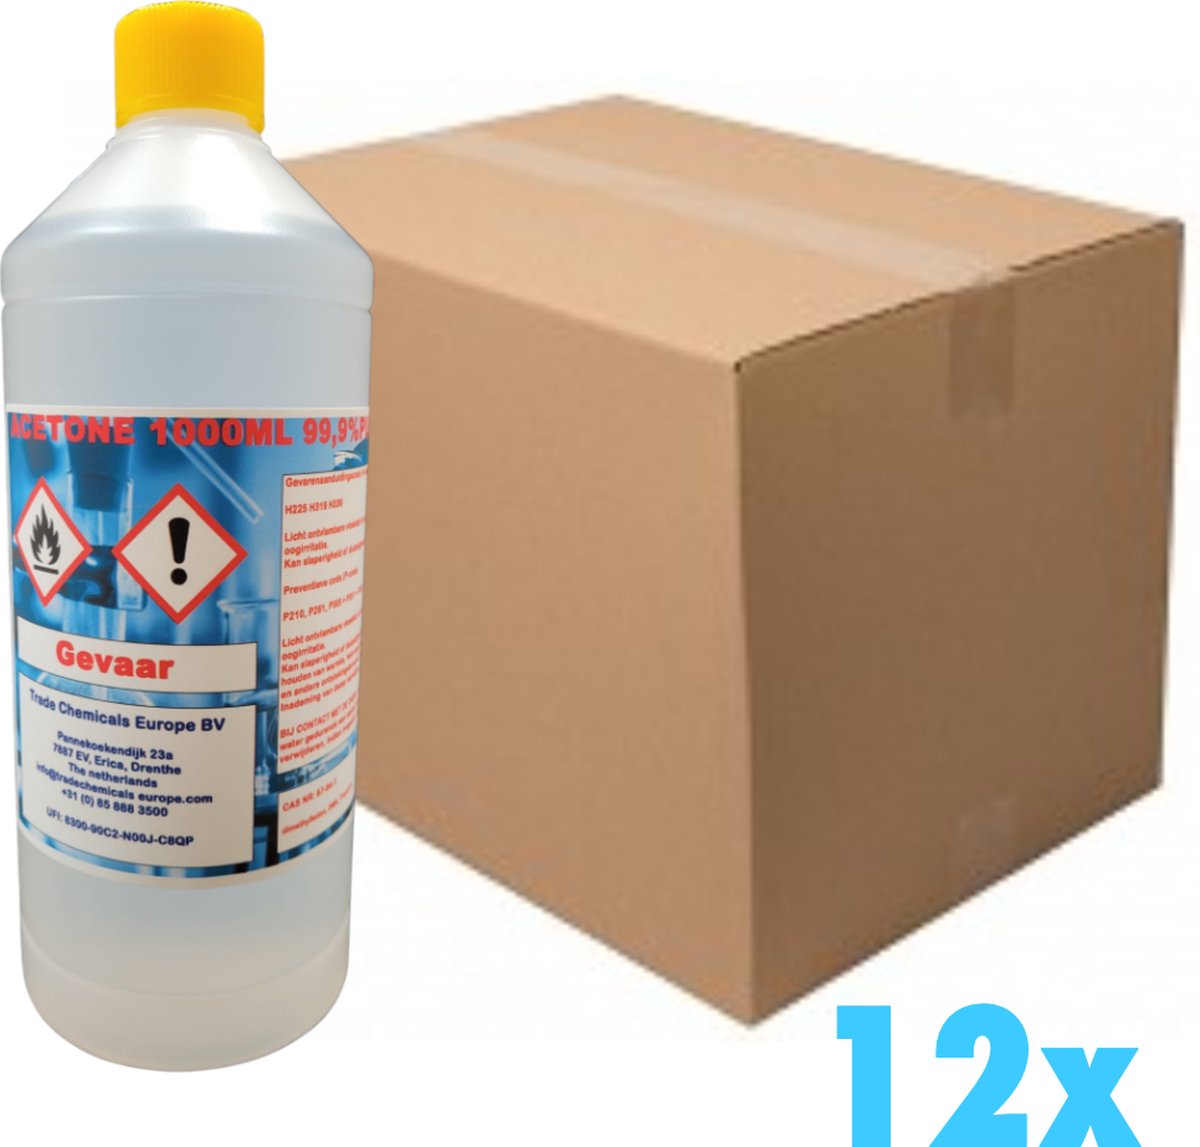 Zuivere - Aceton - Propanone - Verf verdunner - Nagellak remover - 12x 1 Liter - Trade Chemicals Europe BV